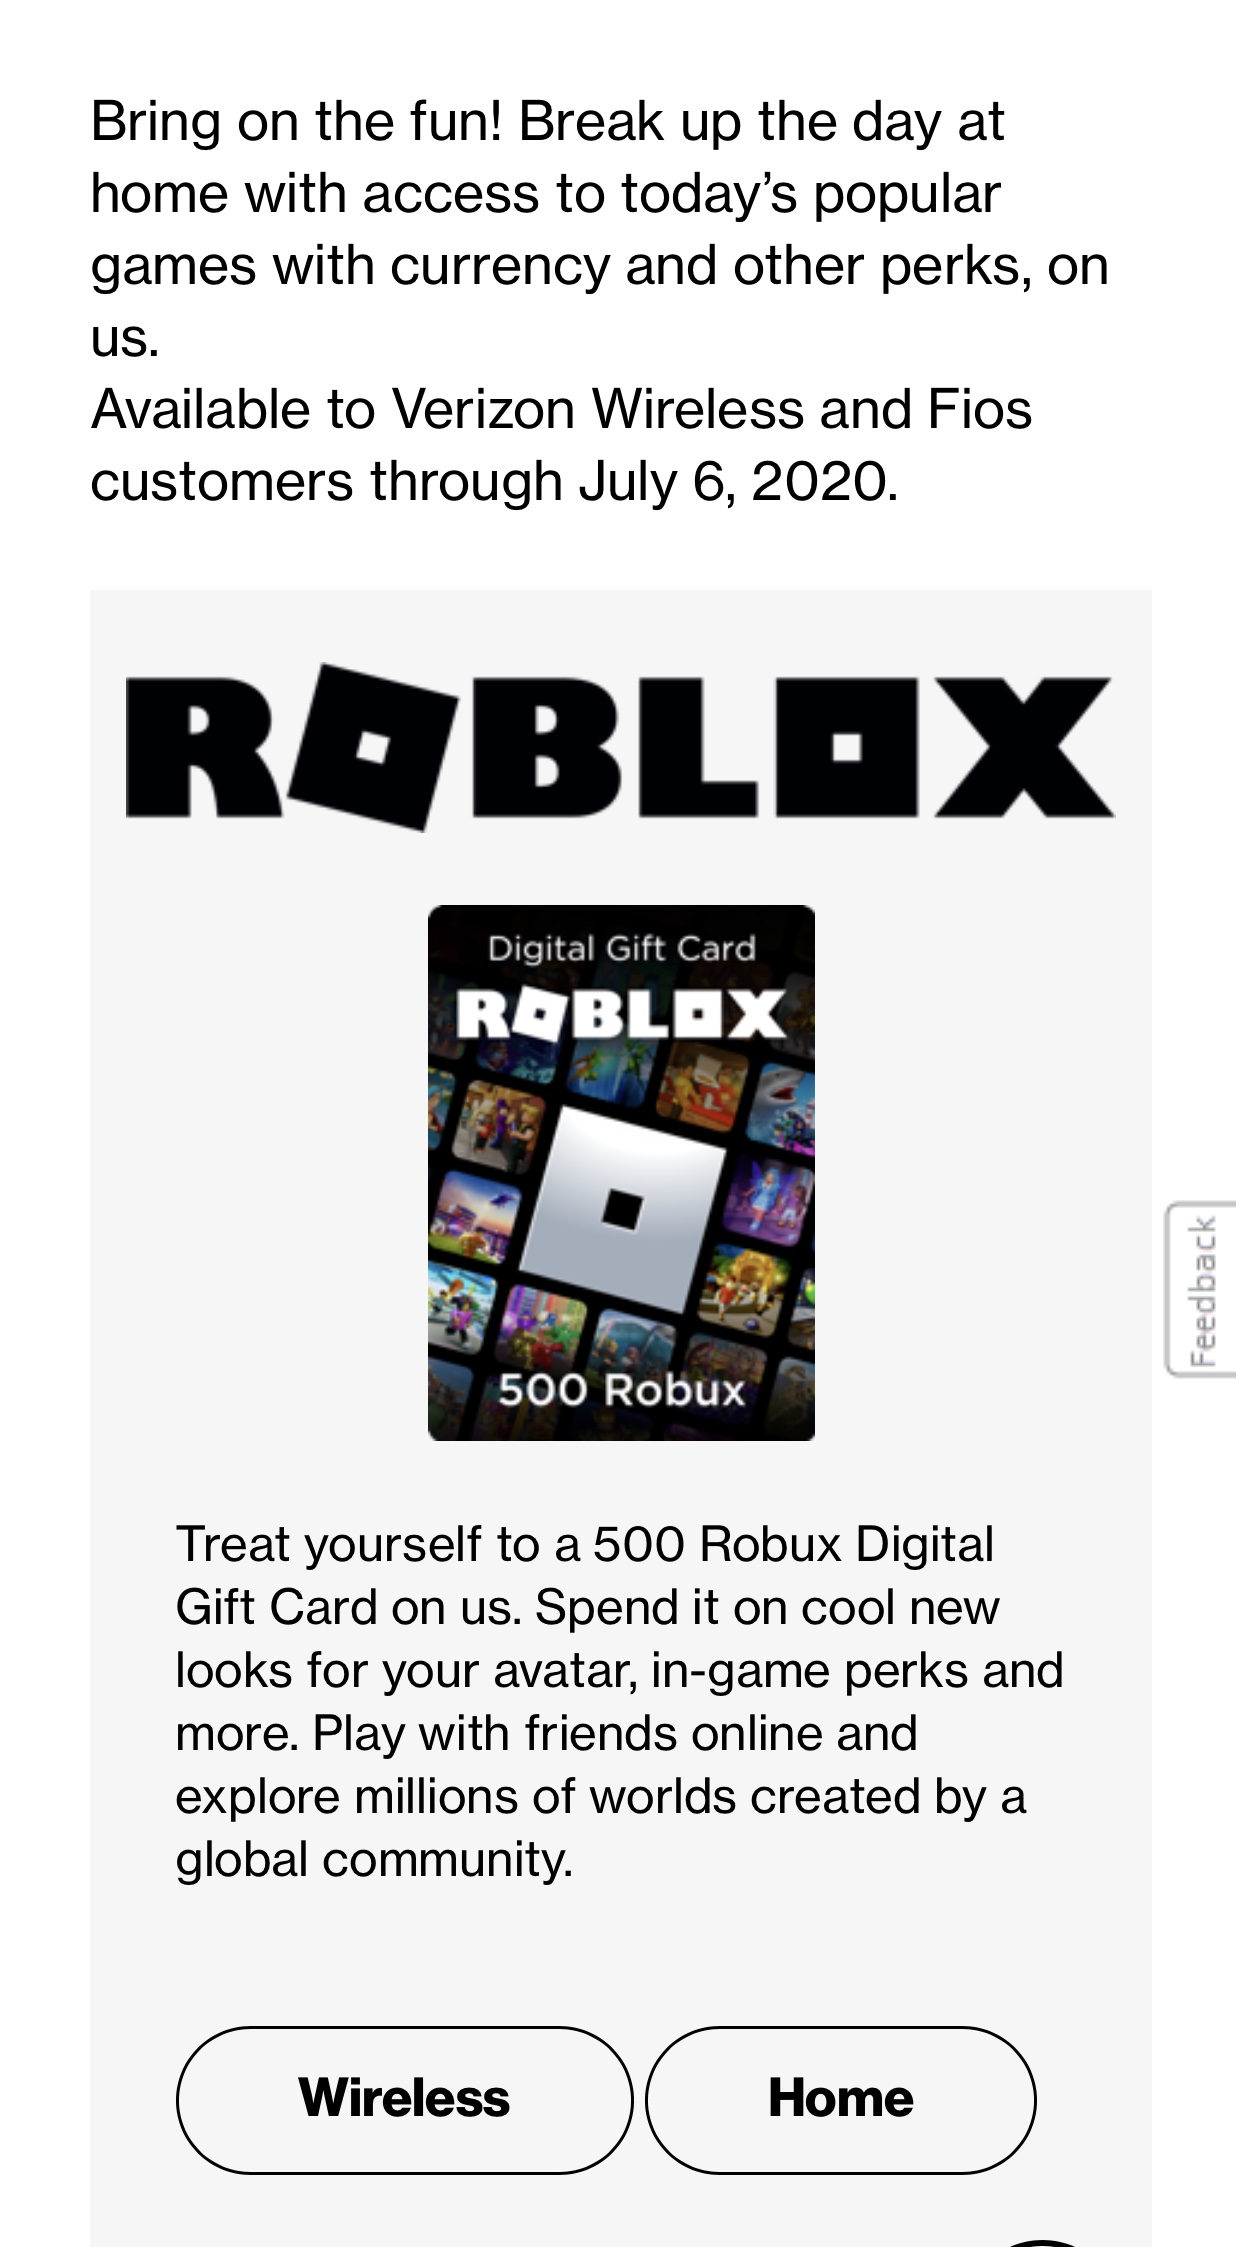 FREE 500 Robux Digital Gift Card for Verizon Customers - Hunt4Freebies